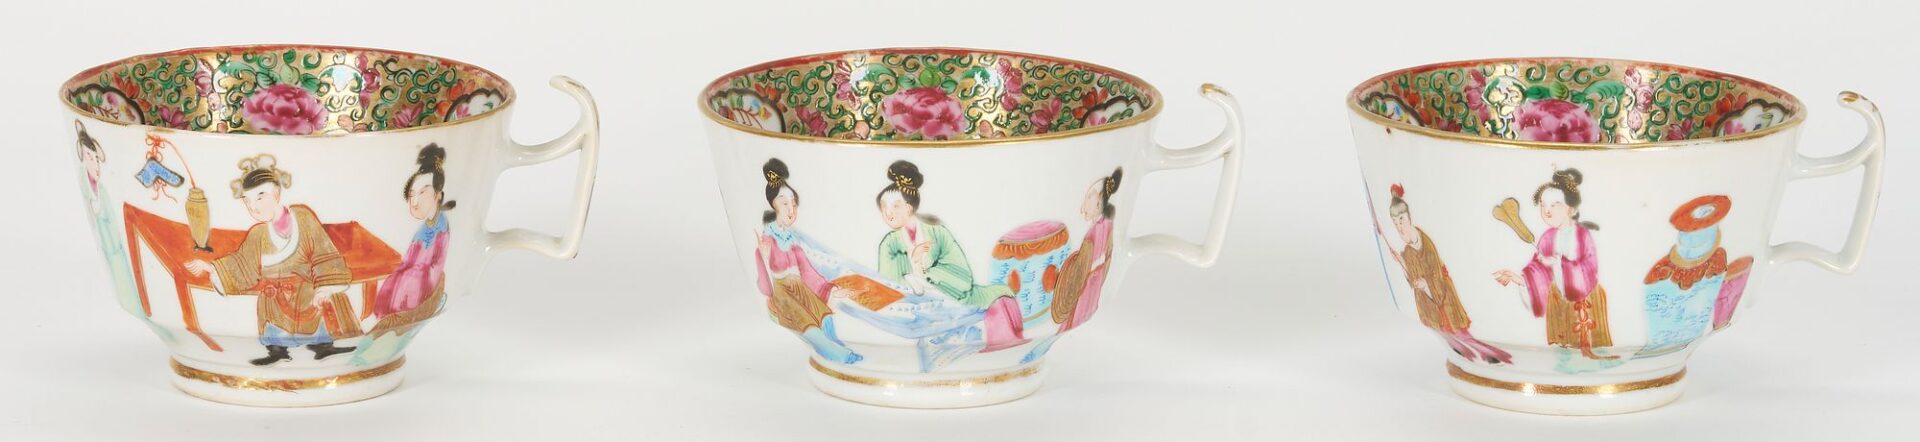 Lot 4: Set Chinese Export Rose Mandarin Cups with Saucers, 16 pcs.